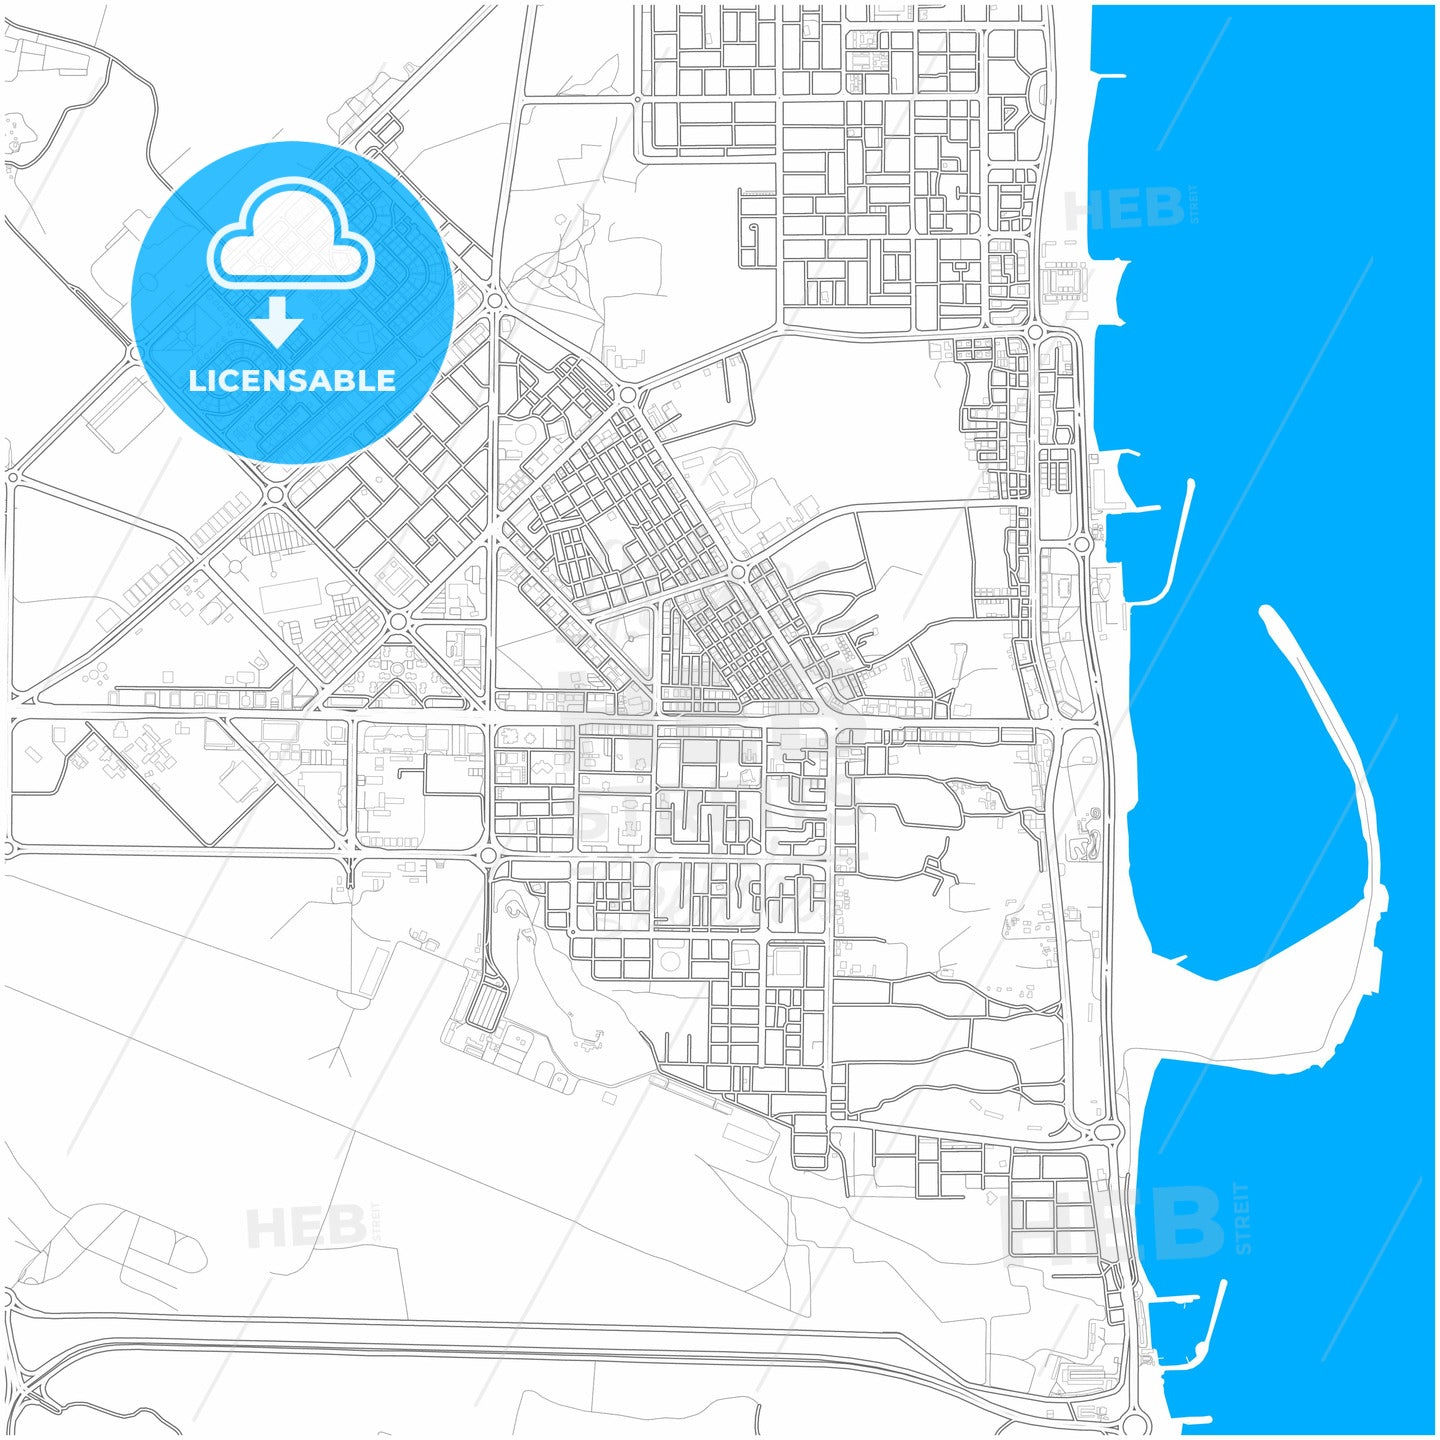 Reef Al Fujairah City, United Arab Emirates, city map with high quality roads.